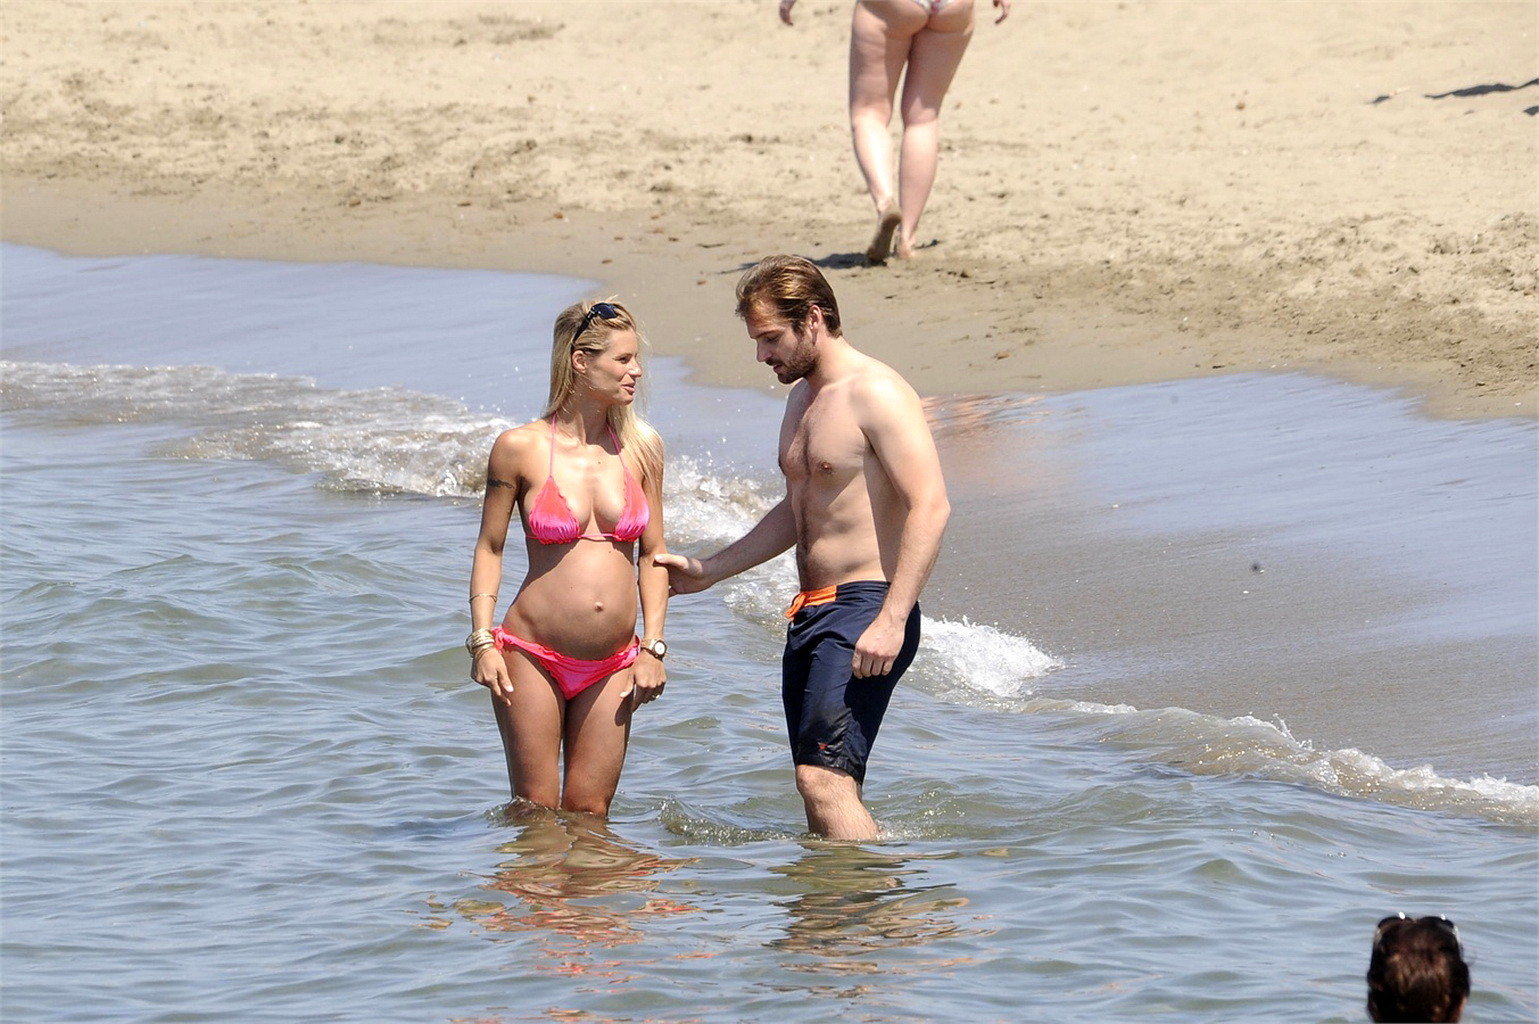 Michelle hunziker embarazada con un bikini en la playa de forte dei marmi, ita
 #75227856